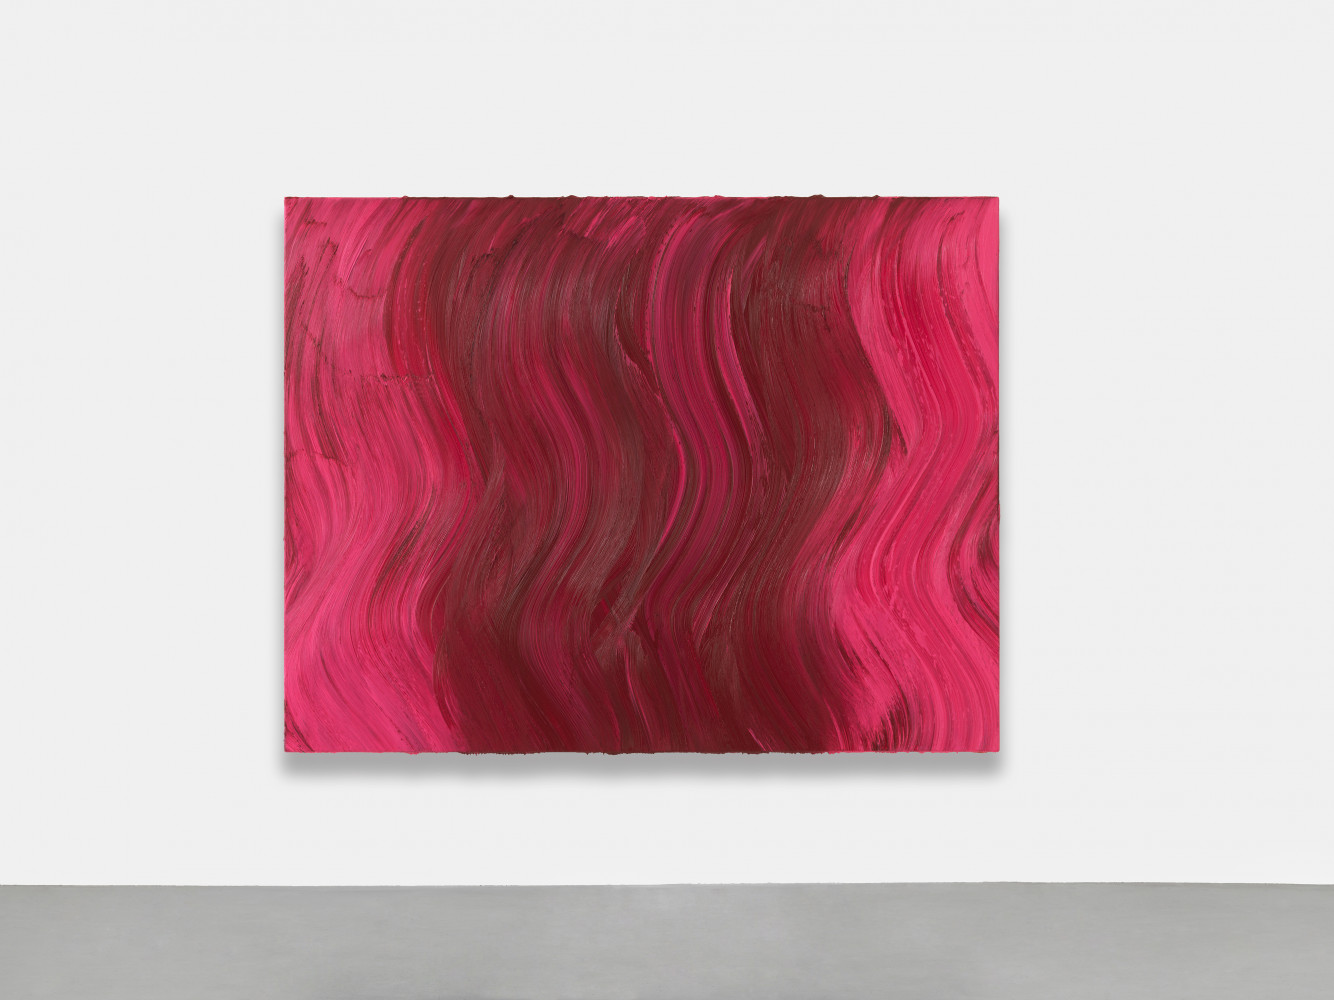 Jason Martin, ‘Untitled (Brilliant pink / Ideal rose)’, 2020, Oil on aluminium